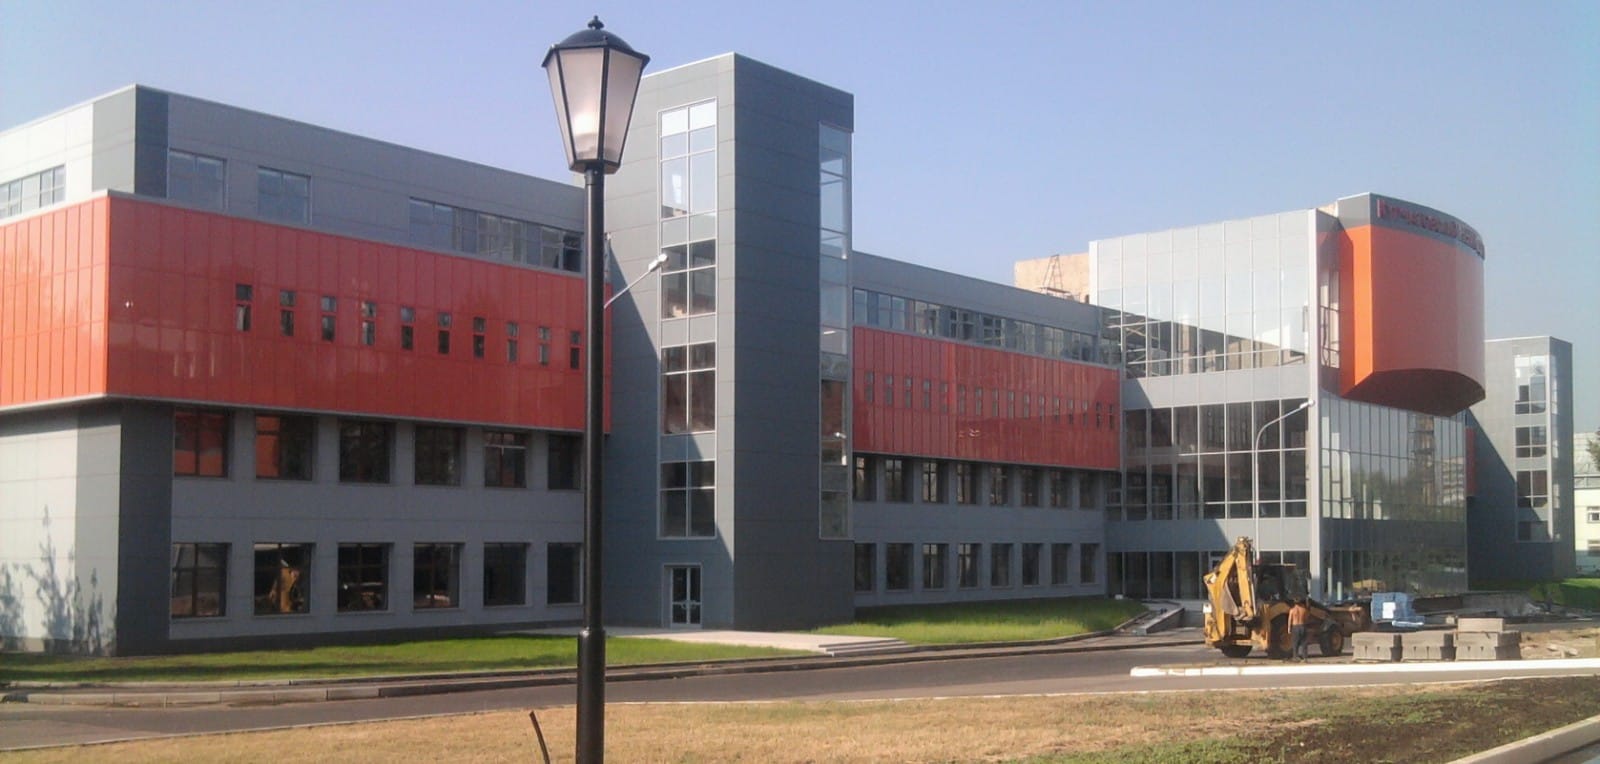 Курчатовский институт москва